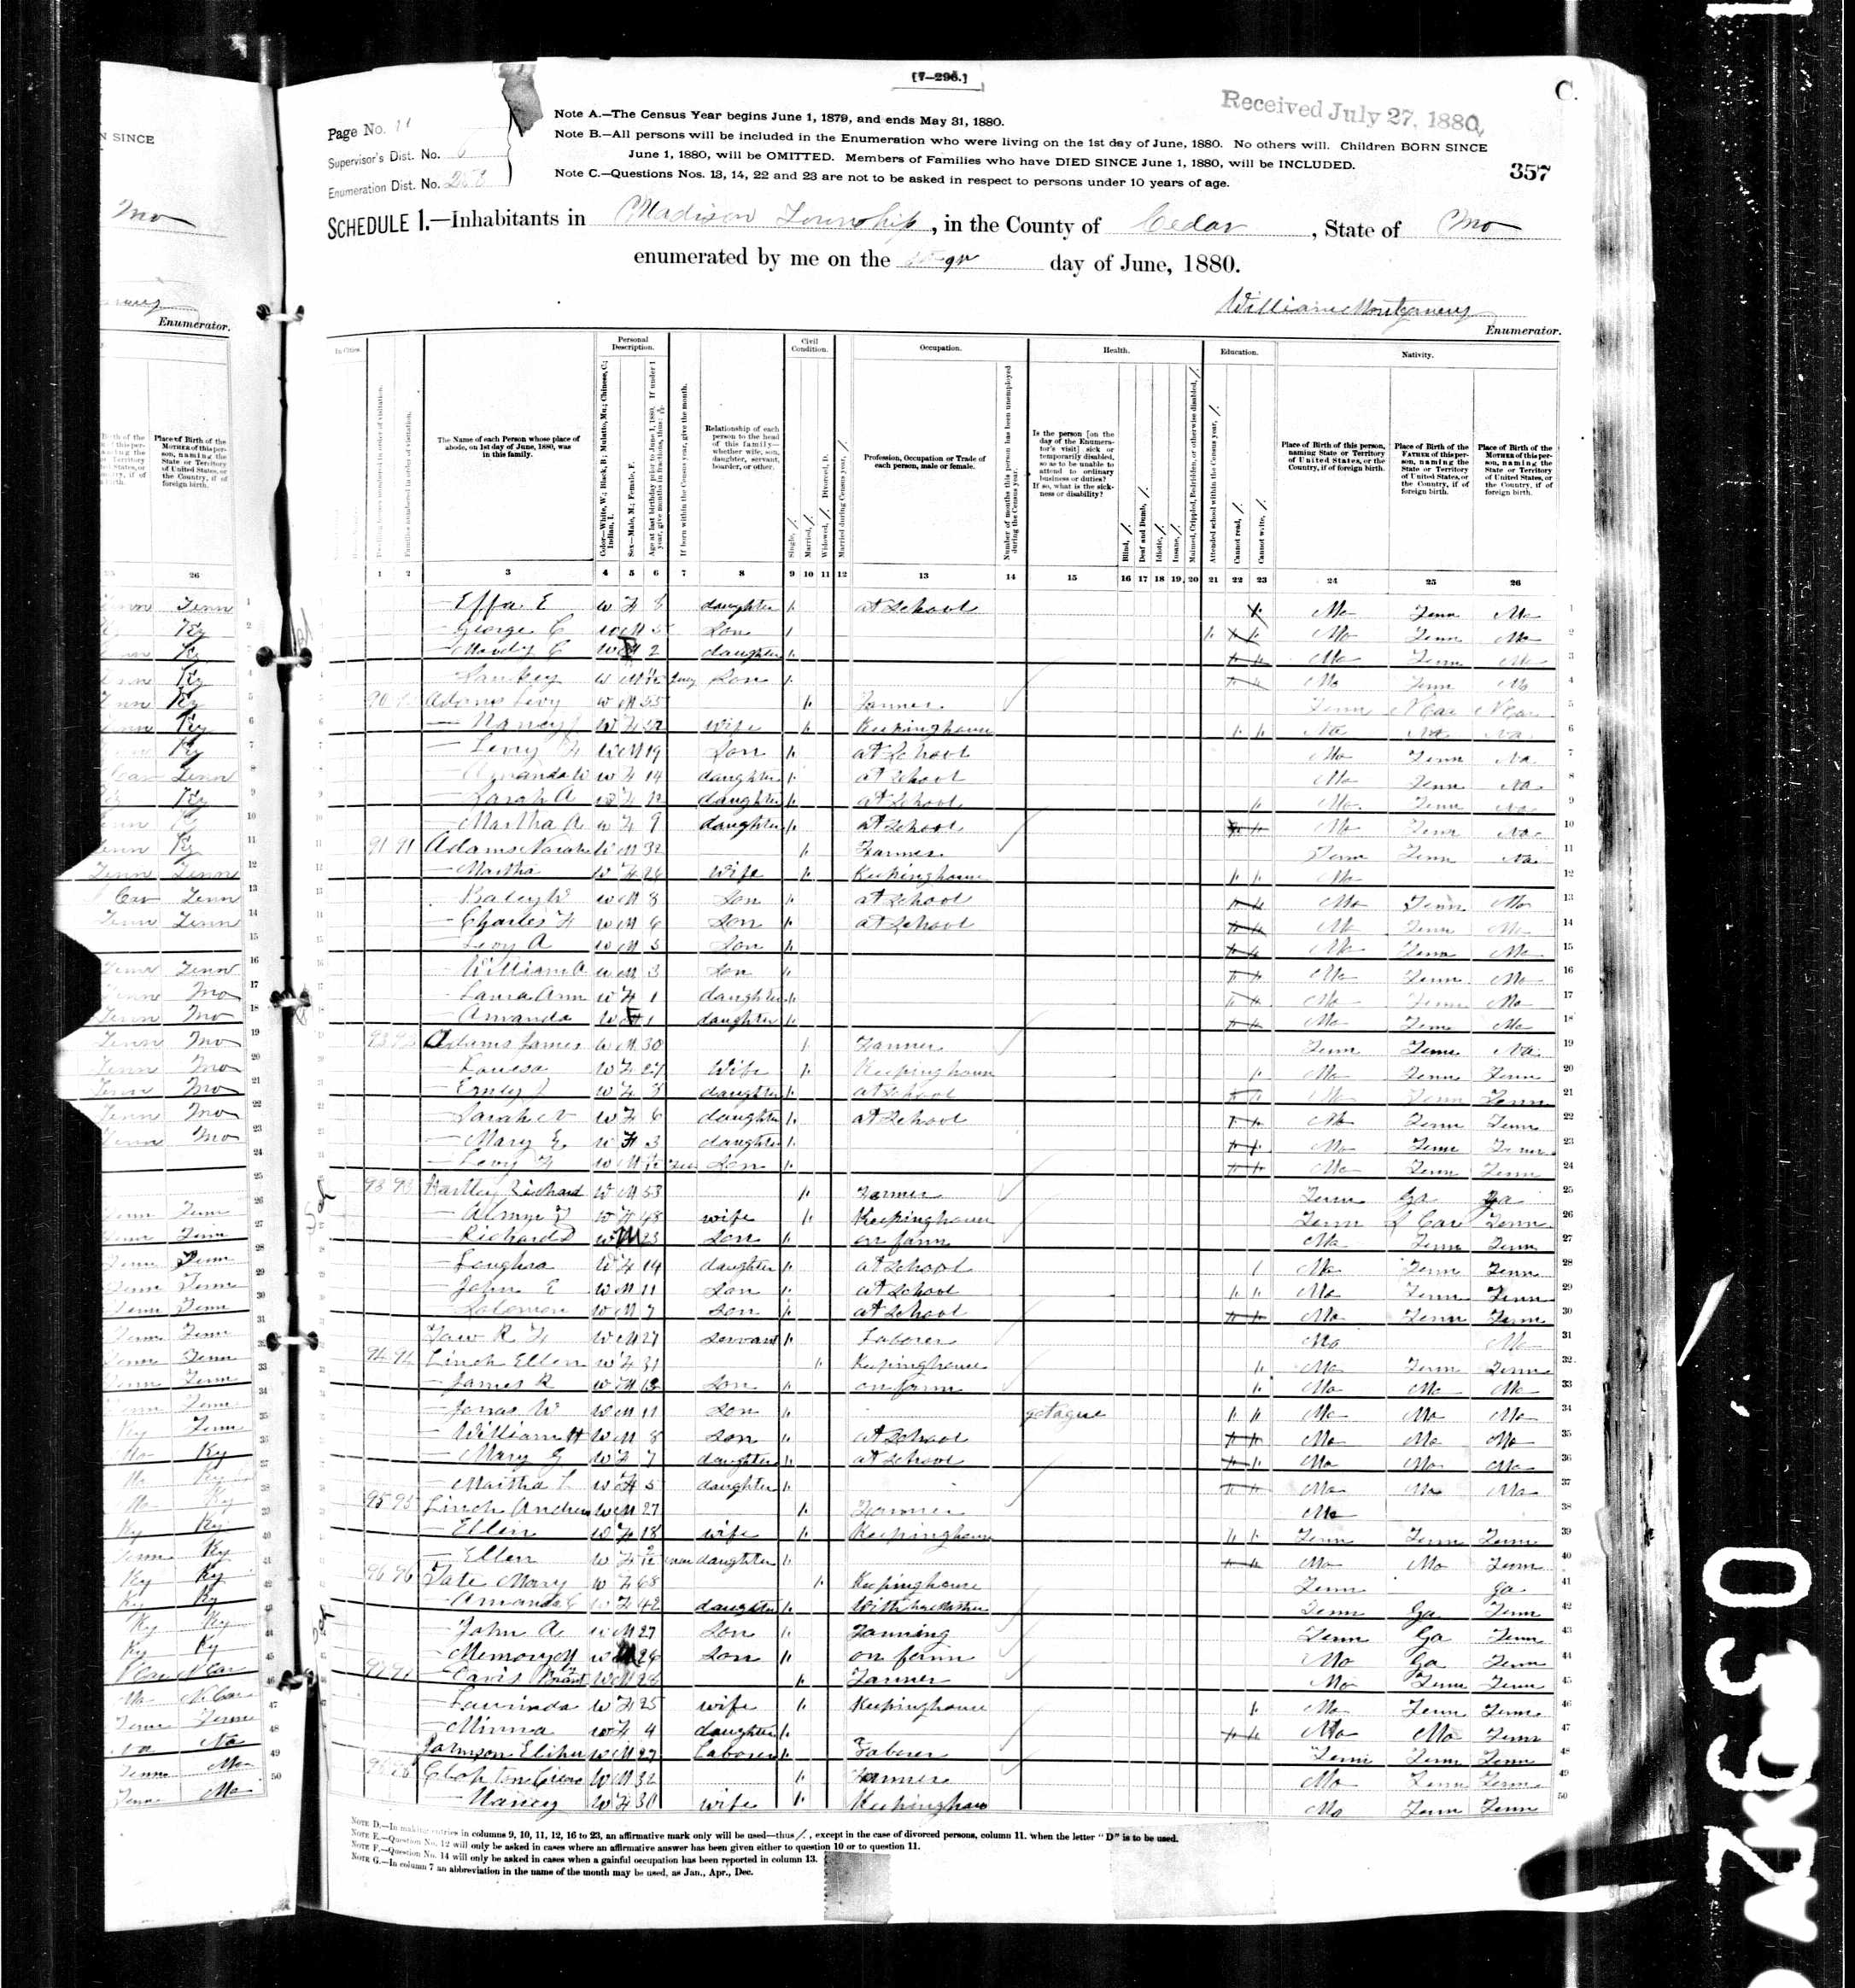 Richard D. Hartley, 1880 Cedar County, MIssouri, census